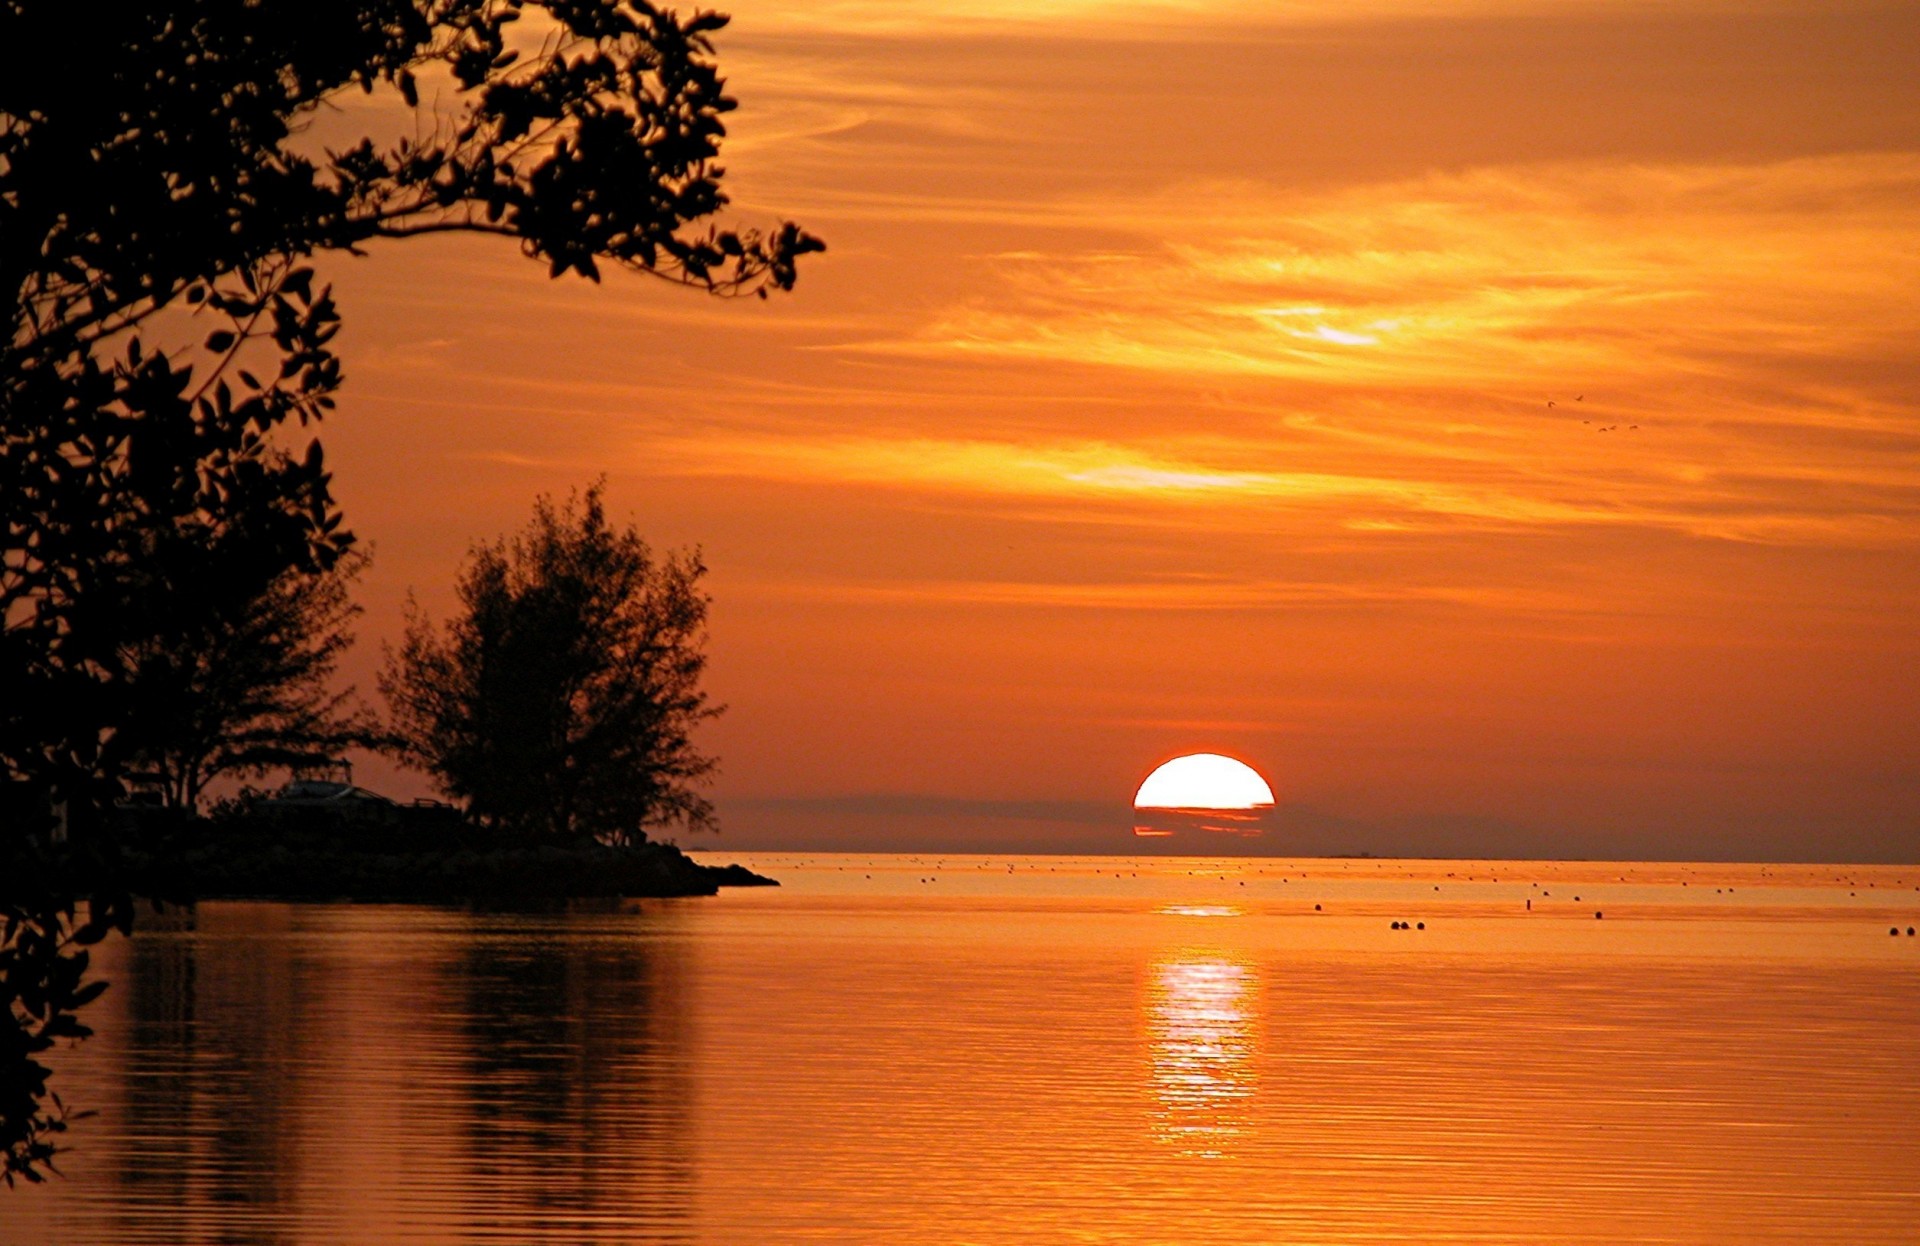 http://www.publicdomainpictures.net/view-image.php?image=88598&picture=sunset-key-west-florida